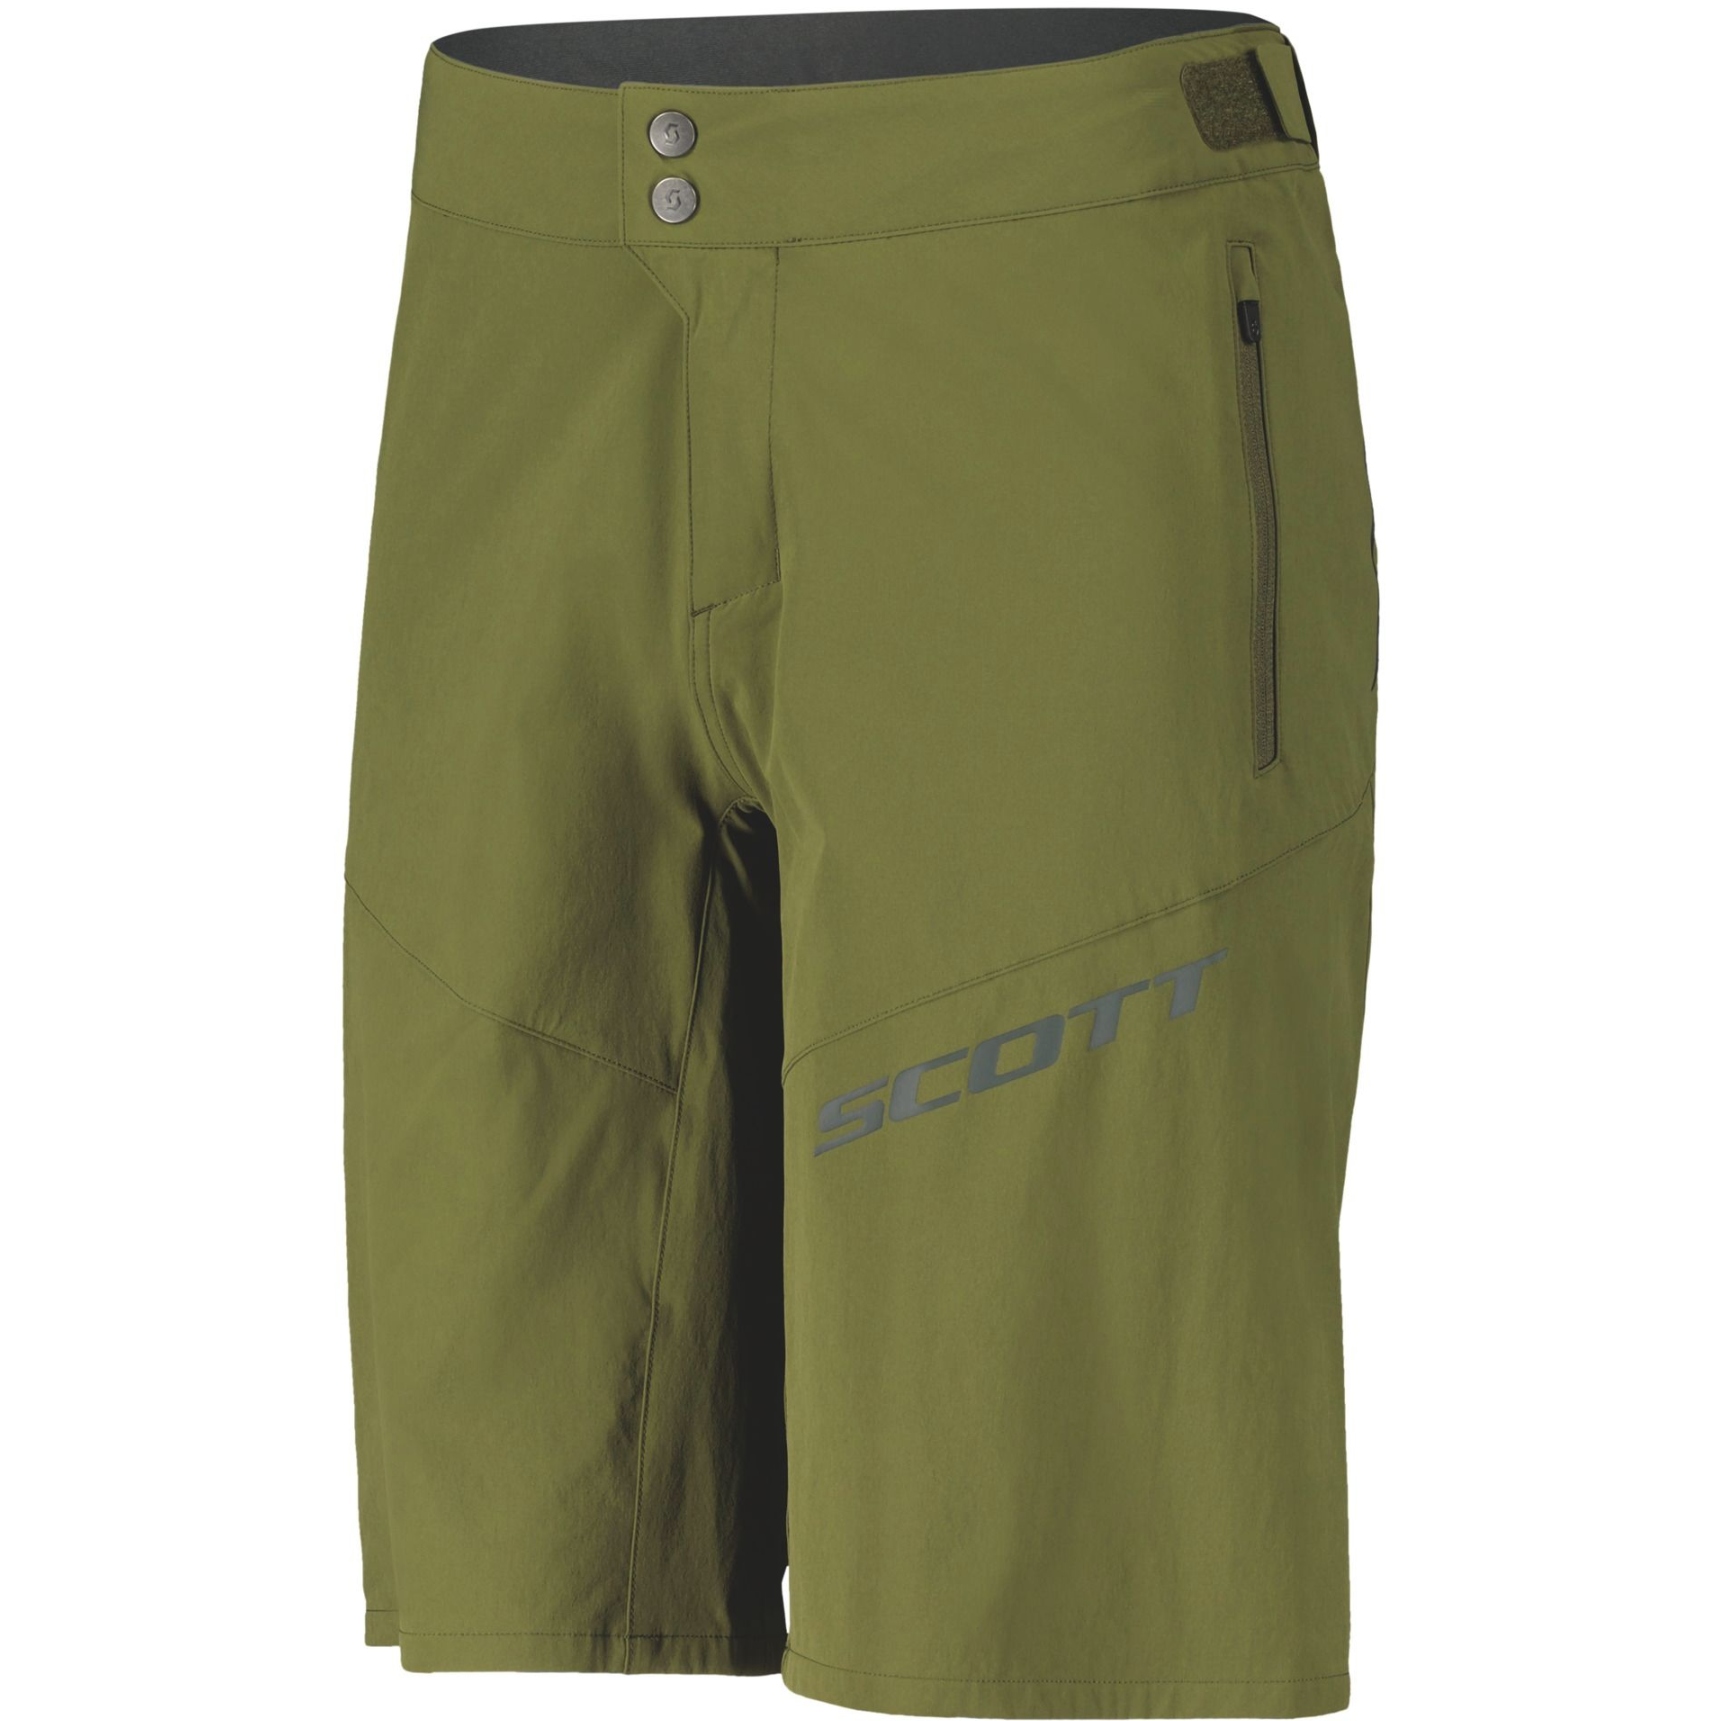 Picture of SCOTT Endurance ls/fit w/pad Shorts Men - fir green